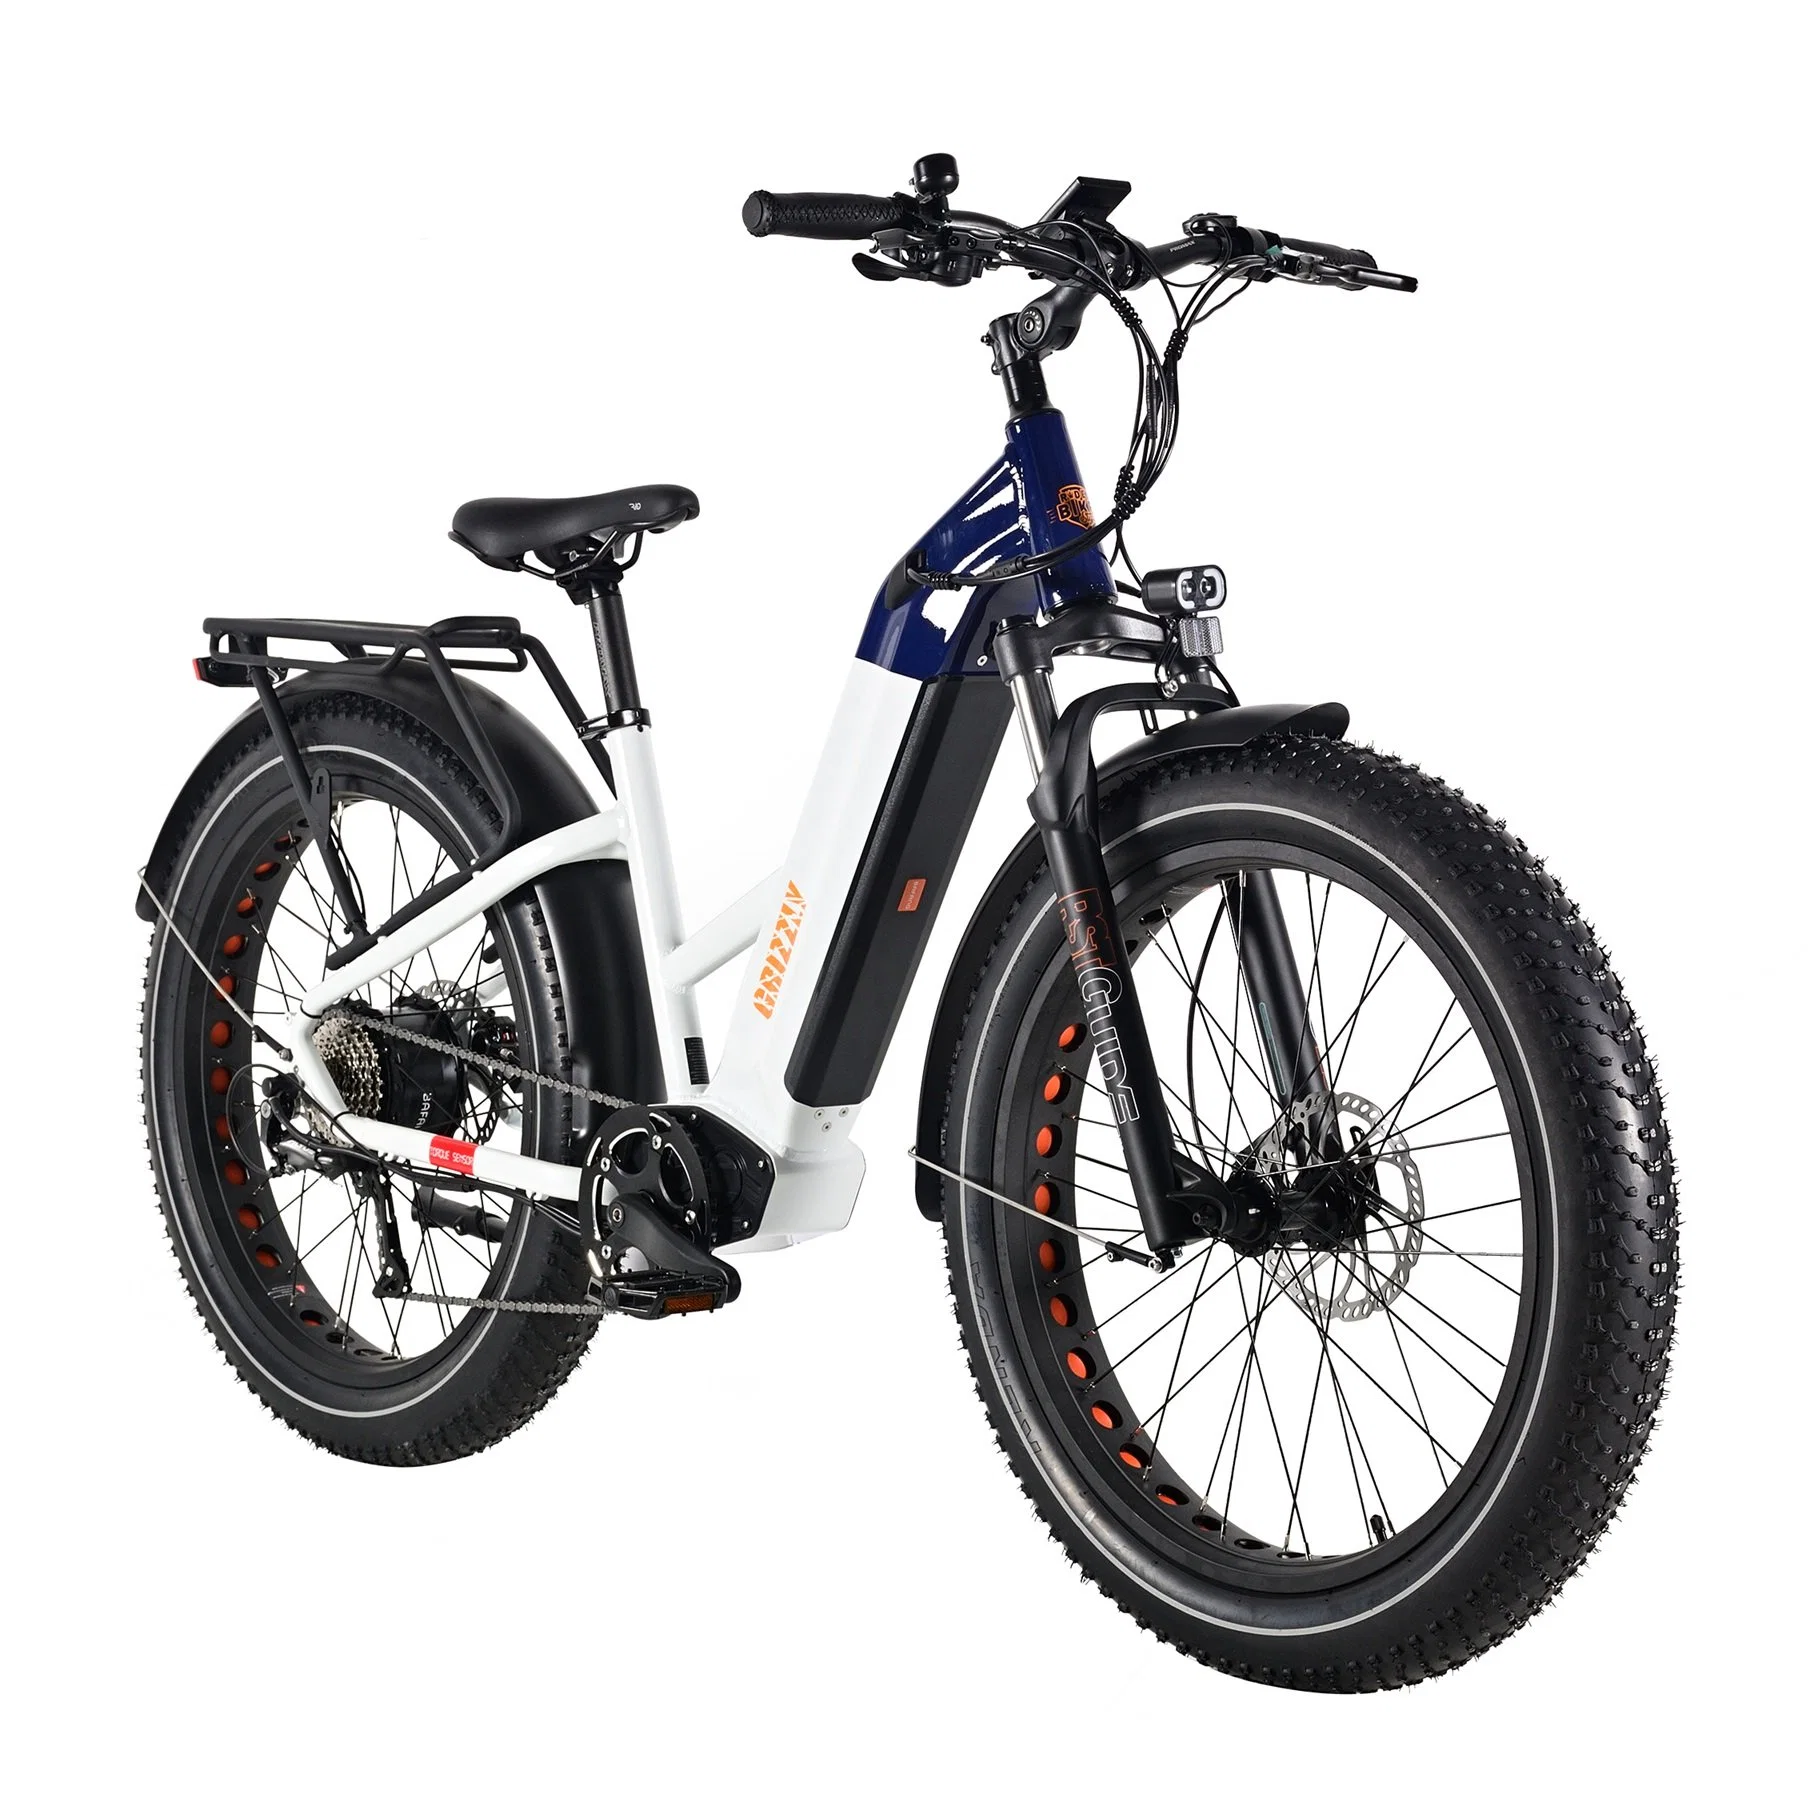 Bicicleta Electrica De Montana Powerful Bike Bateria Extraible De Litio 20ah Rango Largo Hasta 60 Km